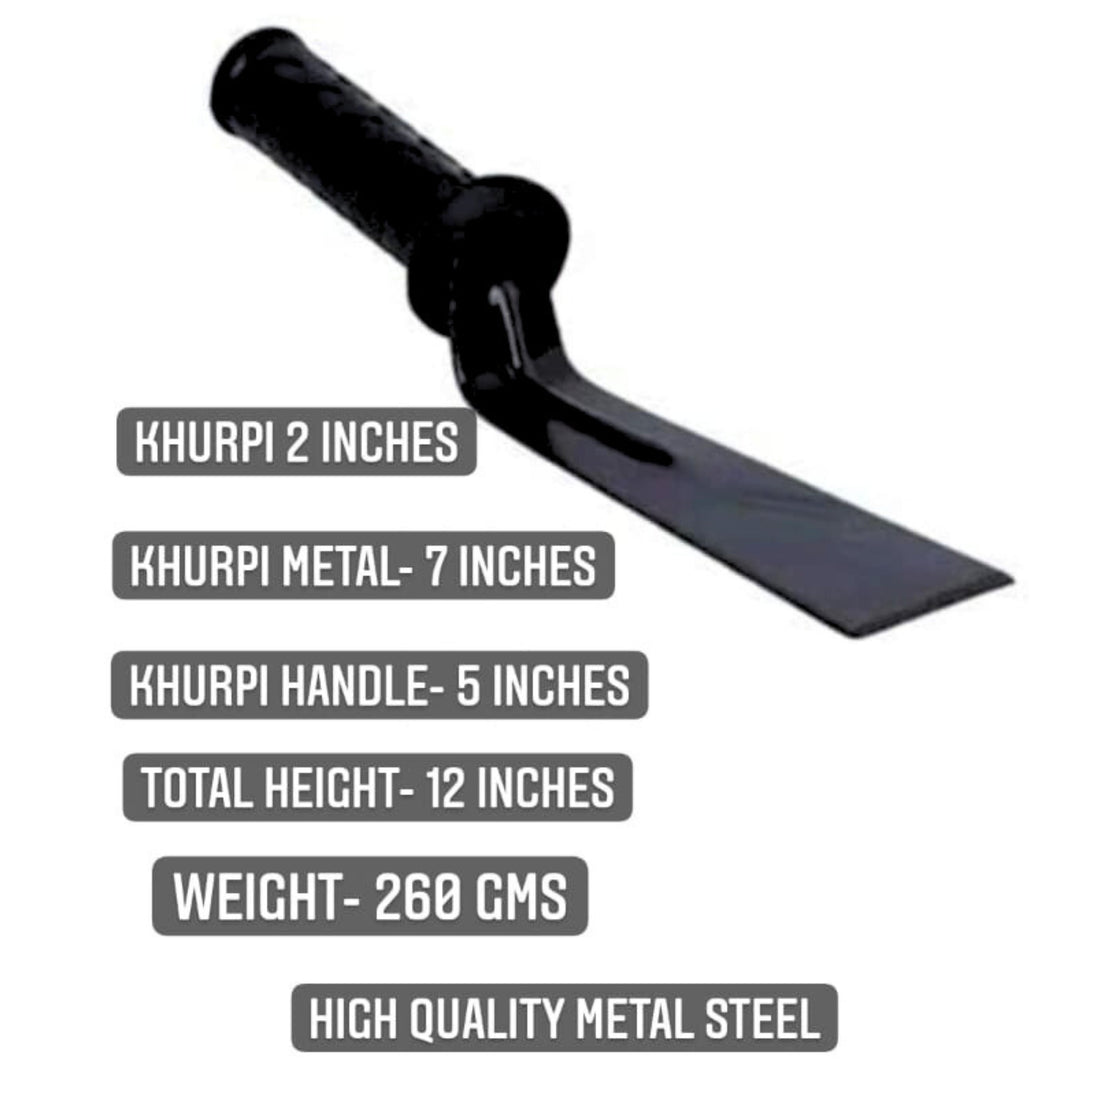 Premium Quality Khurpi / Khurpa Gardening Tool - 2 Inches